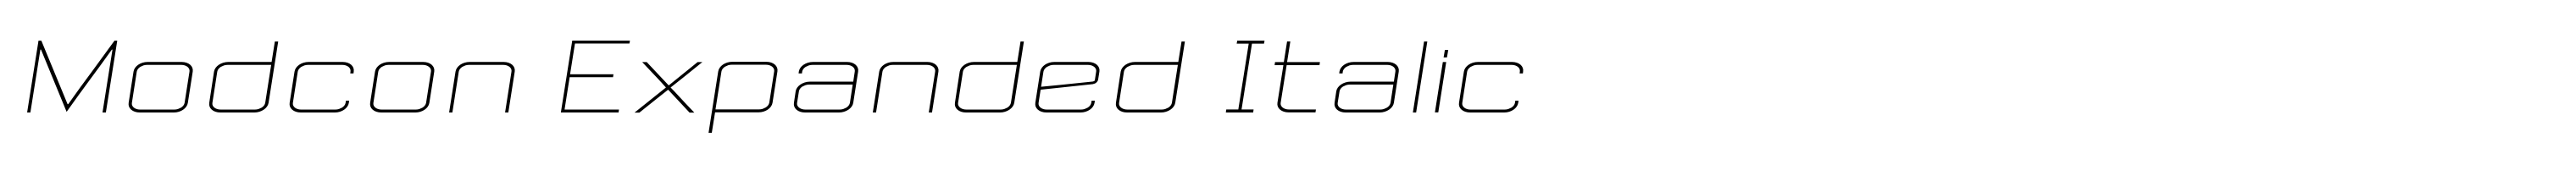 Modcon Expanded Italic